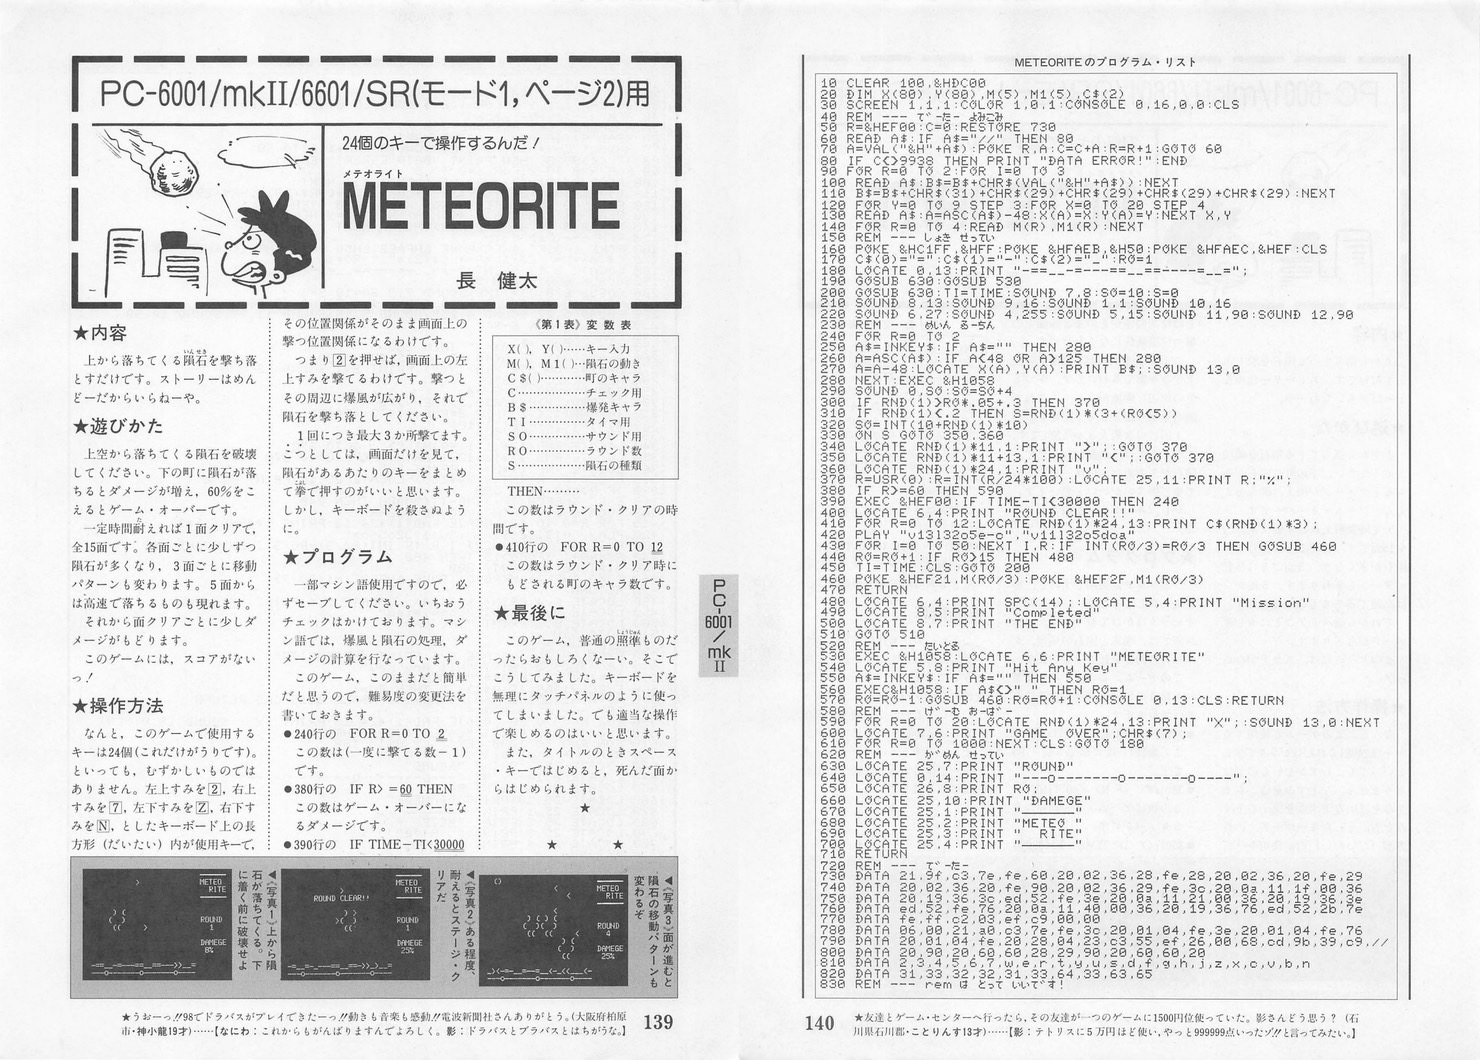 METEORITE source code in 1989-09 issue of Mycom BASIC Magazine